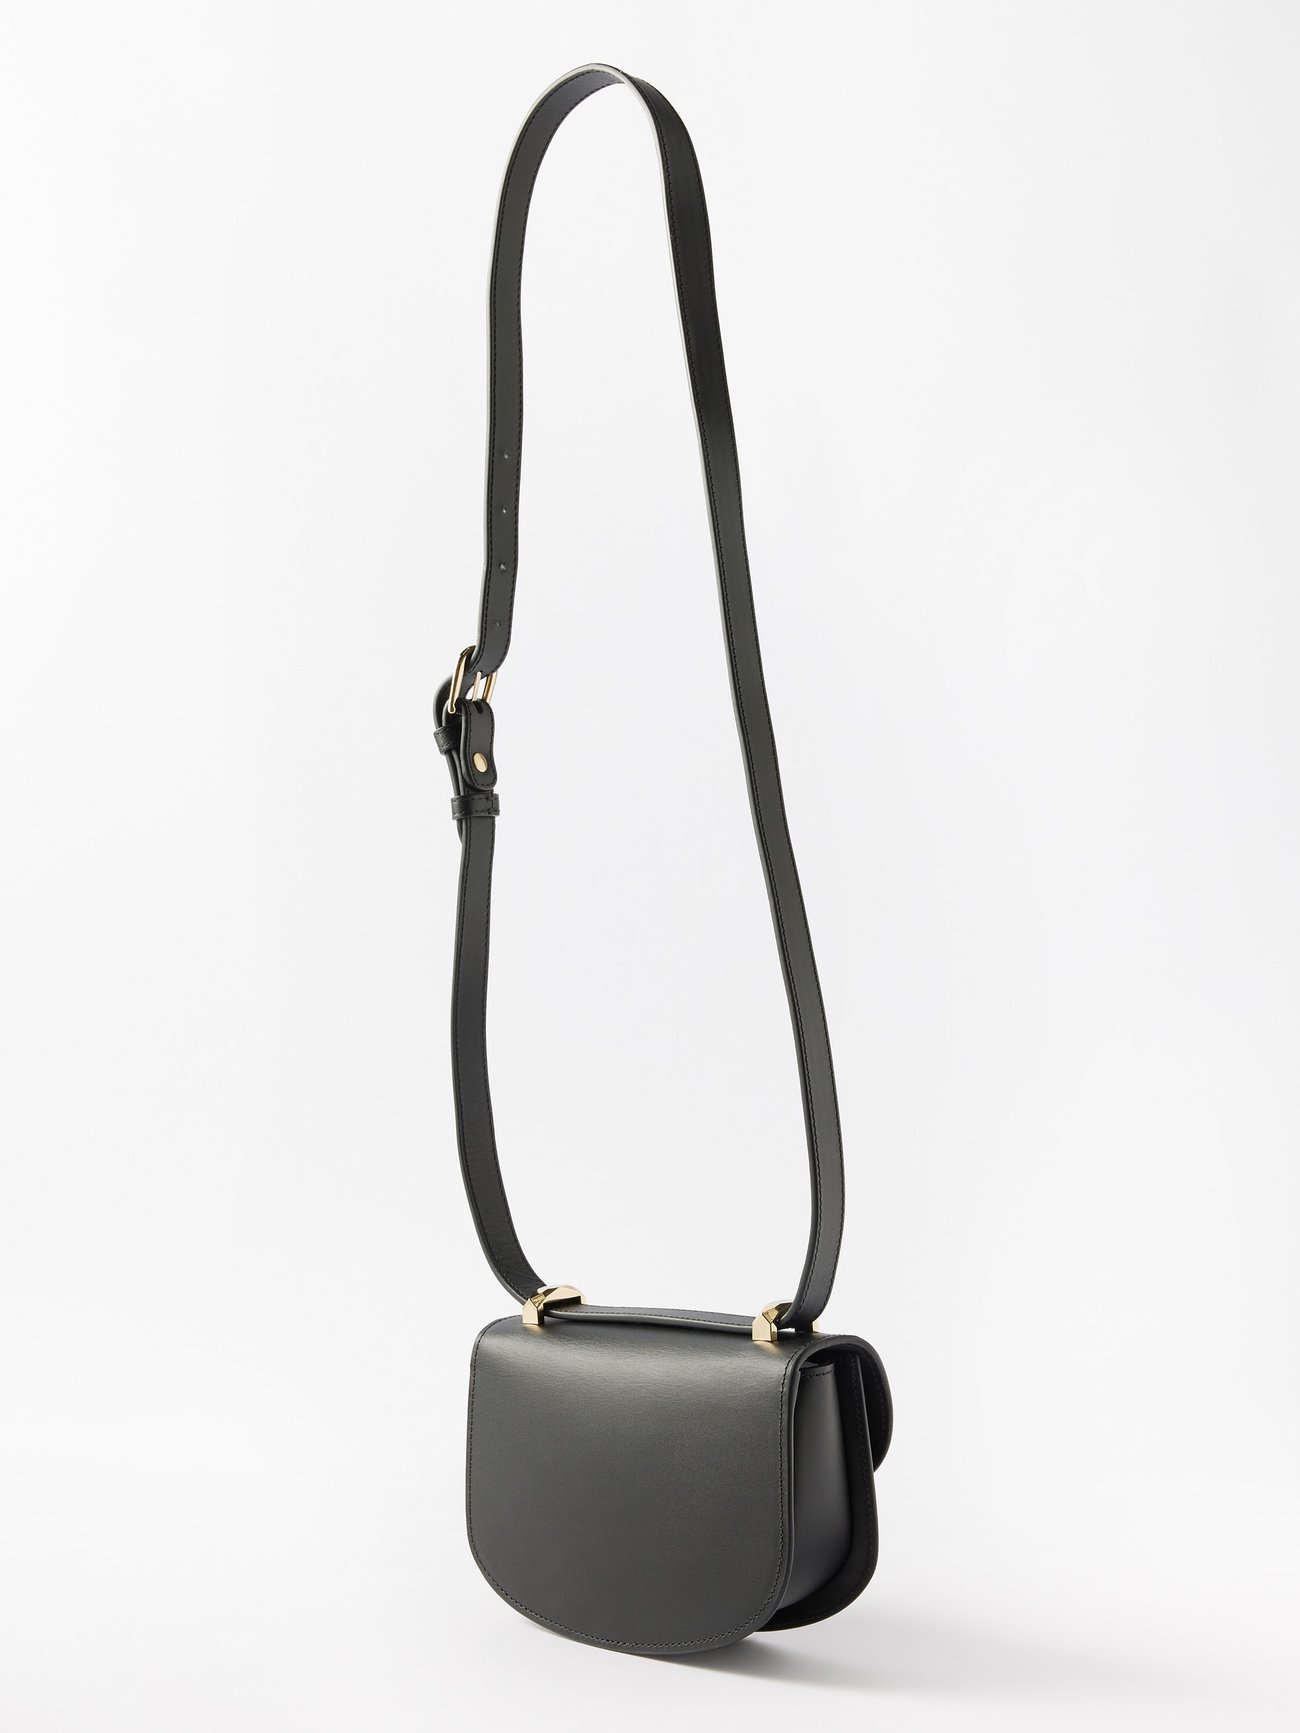 Genève leather cross-body bag, A.P.C., MATCHESFASHION.COM UK